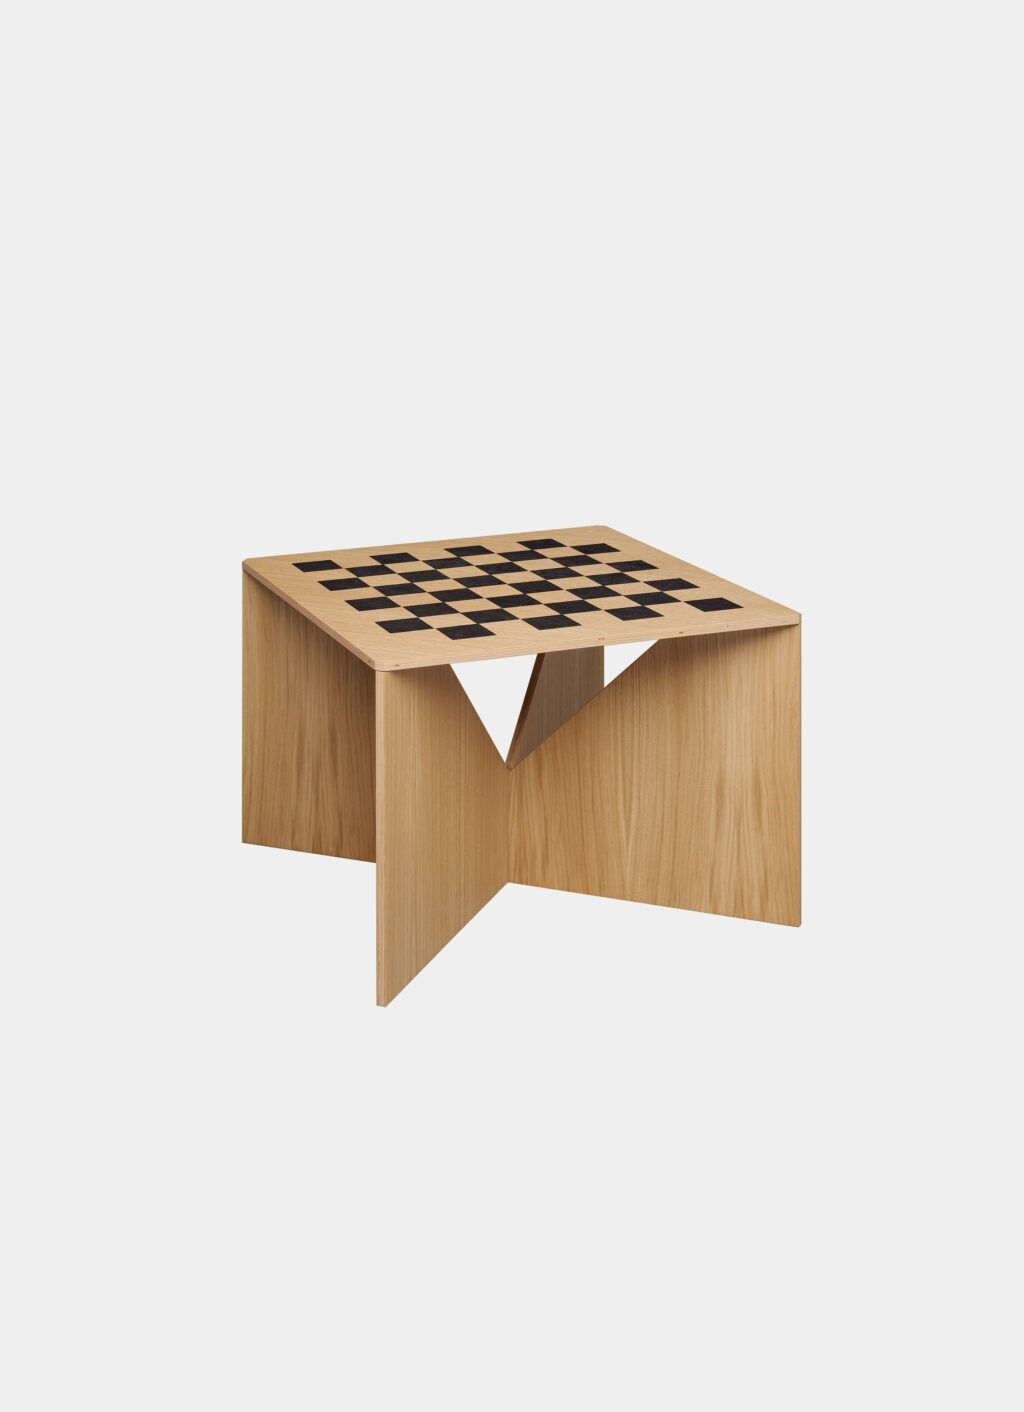 e15 - Ferdinand Kramer - Calvert Chess - Coffee table